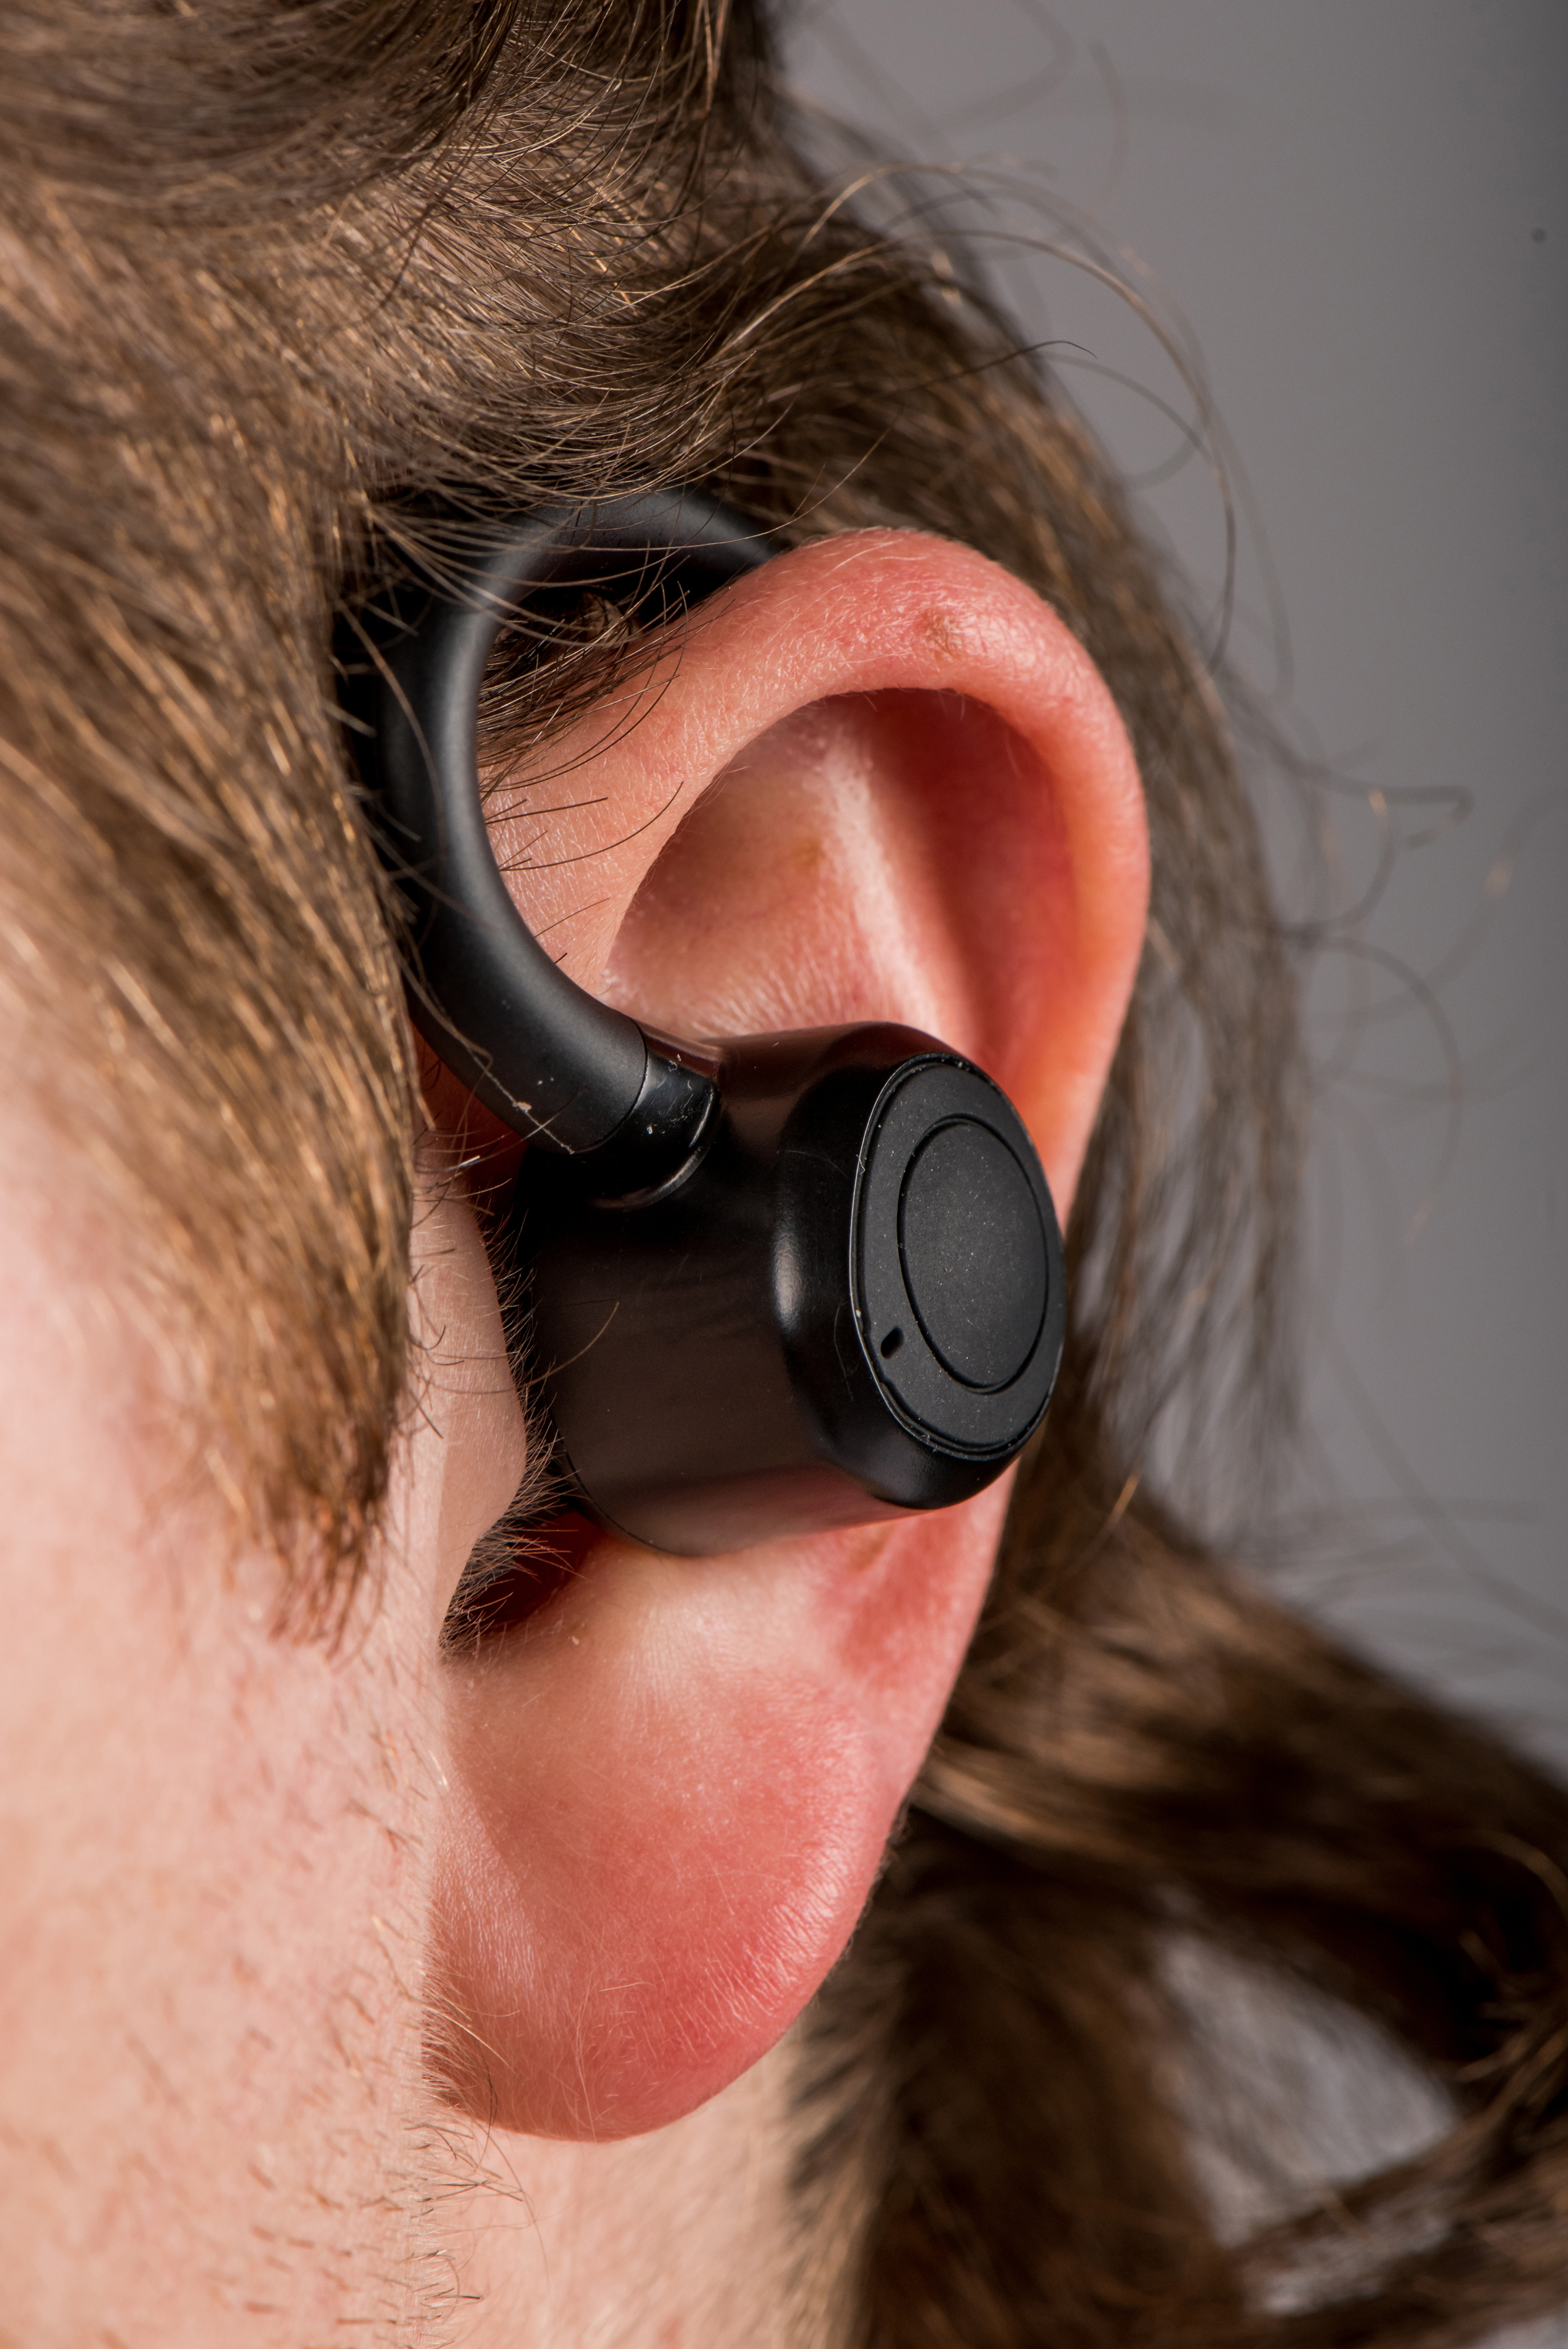 - - Schwarz Headphone IPX5 -, Bluetooth Bluetooth LENCO TWS EPB-460BK In-ear